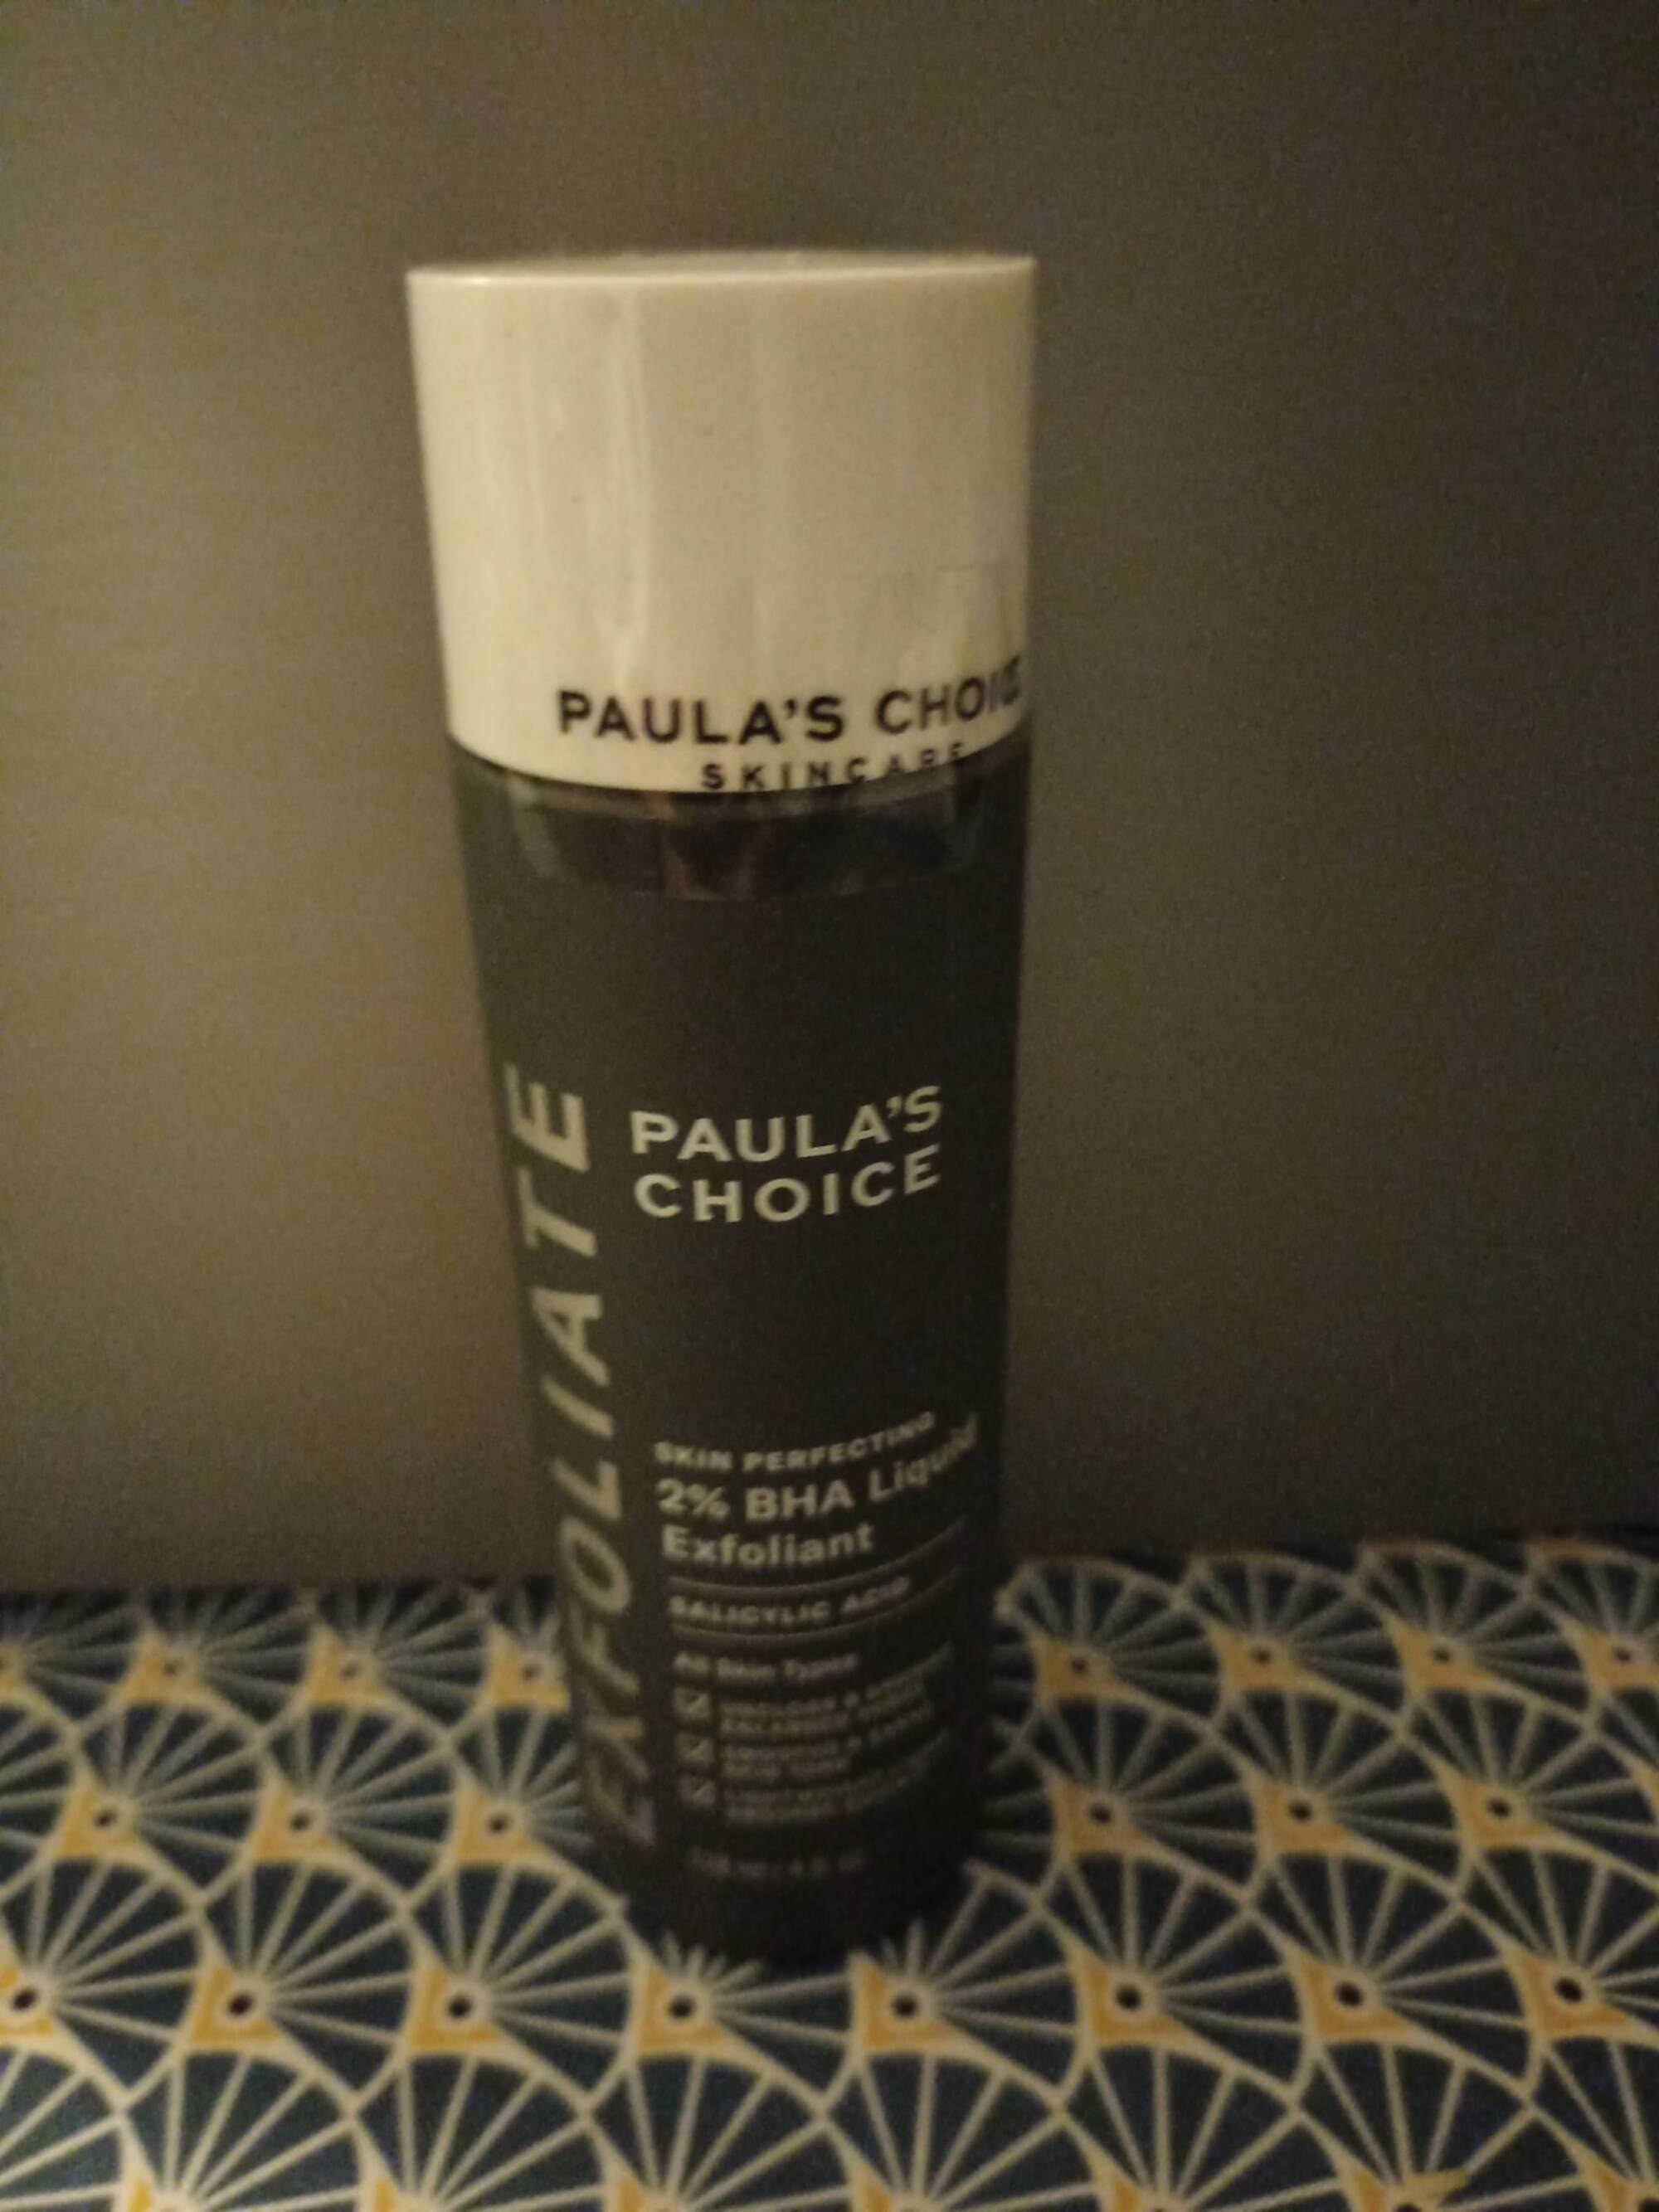 PAULA'S CHOICE - Skin perfecting lotion exfoliante 2% BHA